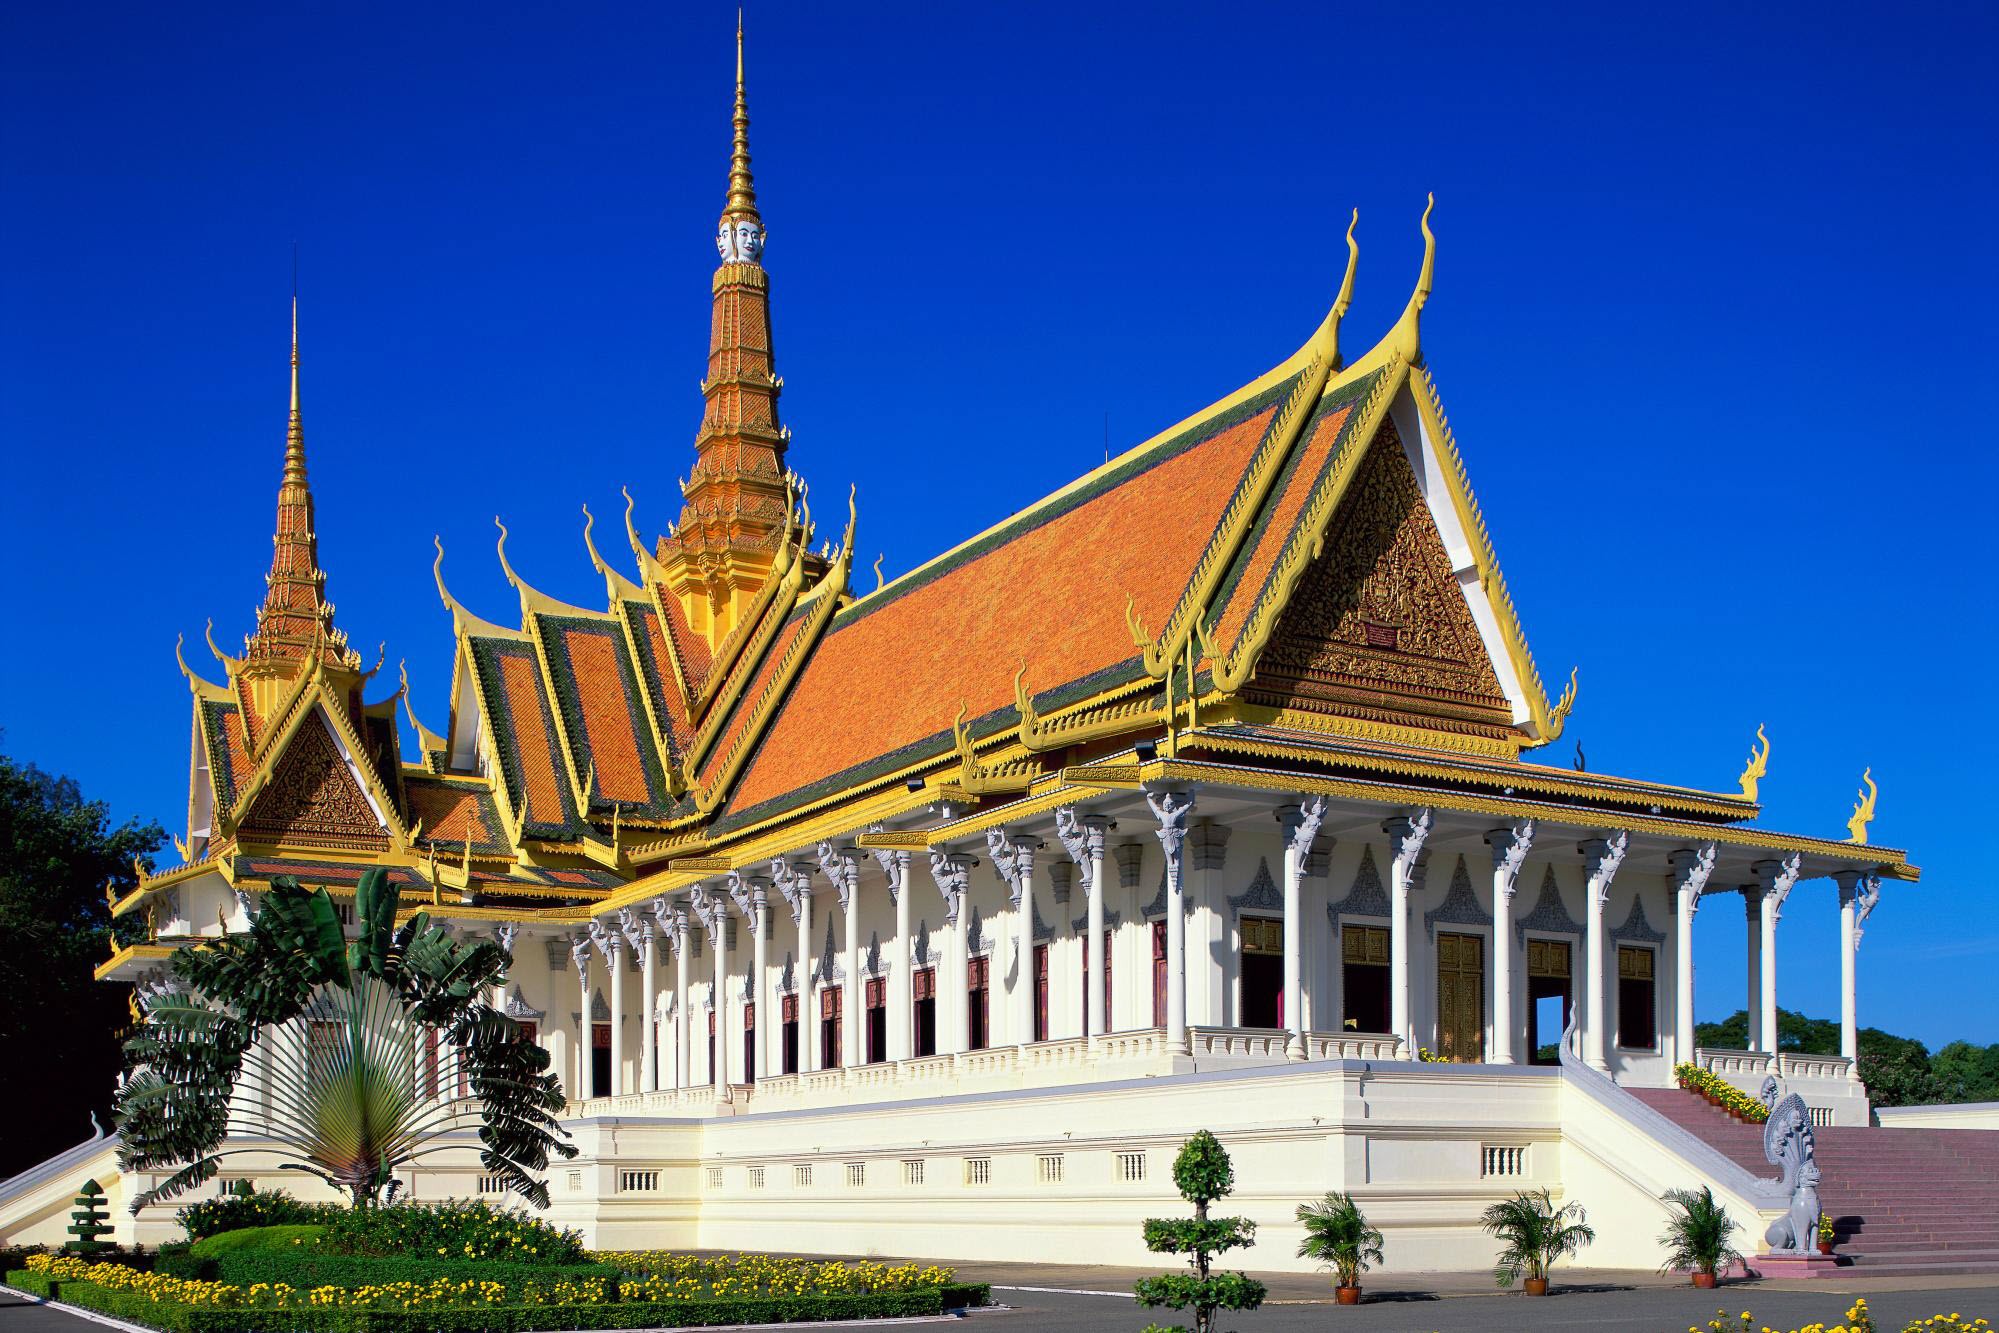 General 1999x1333 Thailand Royal Palace of Cambodia Cambodia Phnom Penh Asia building